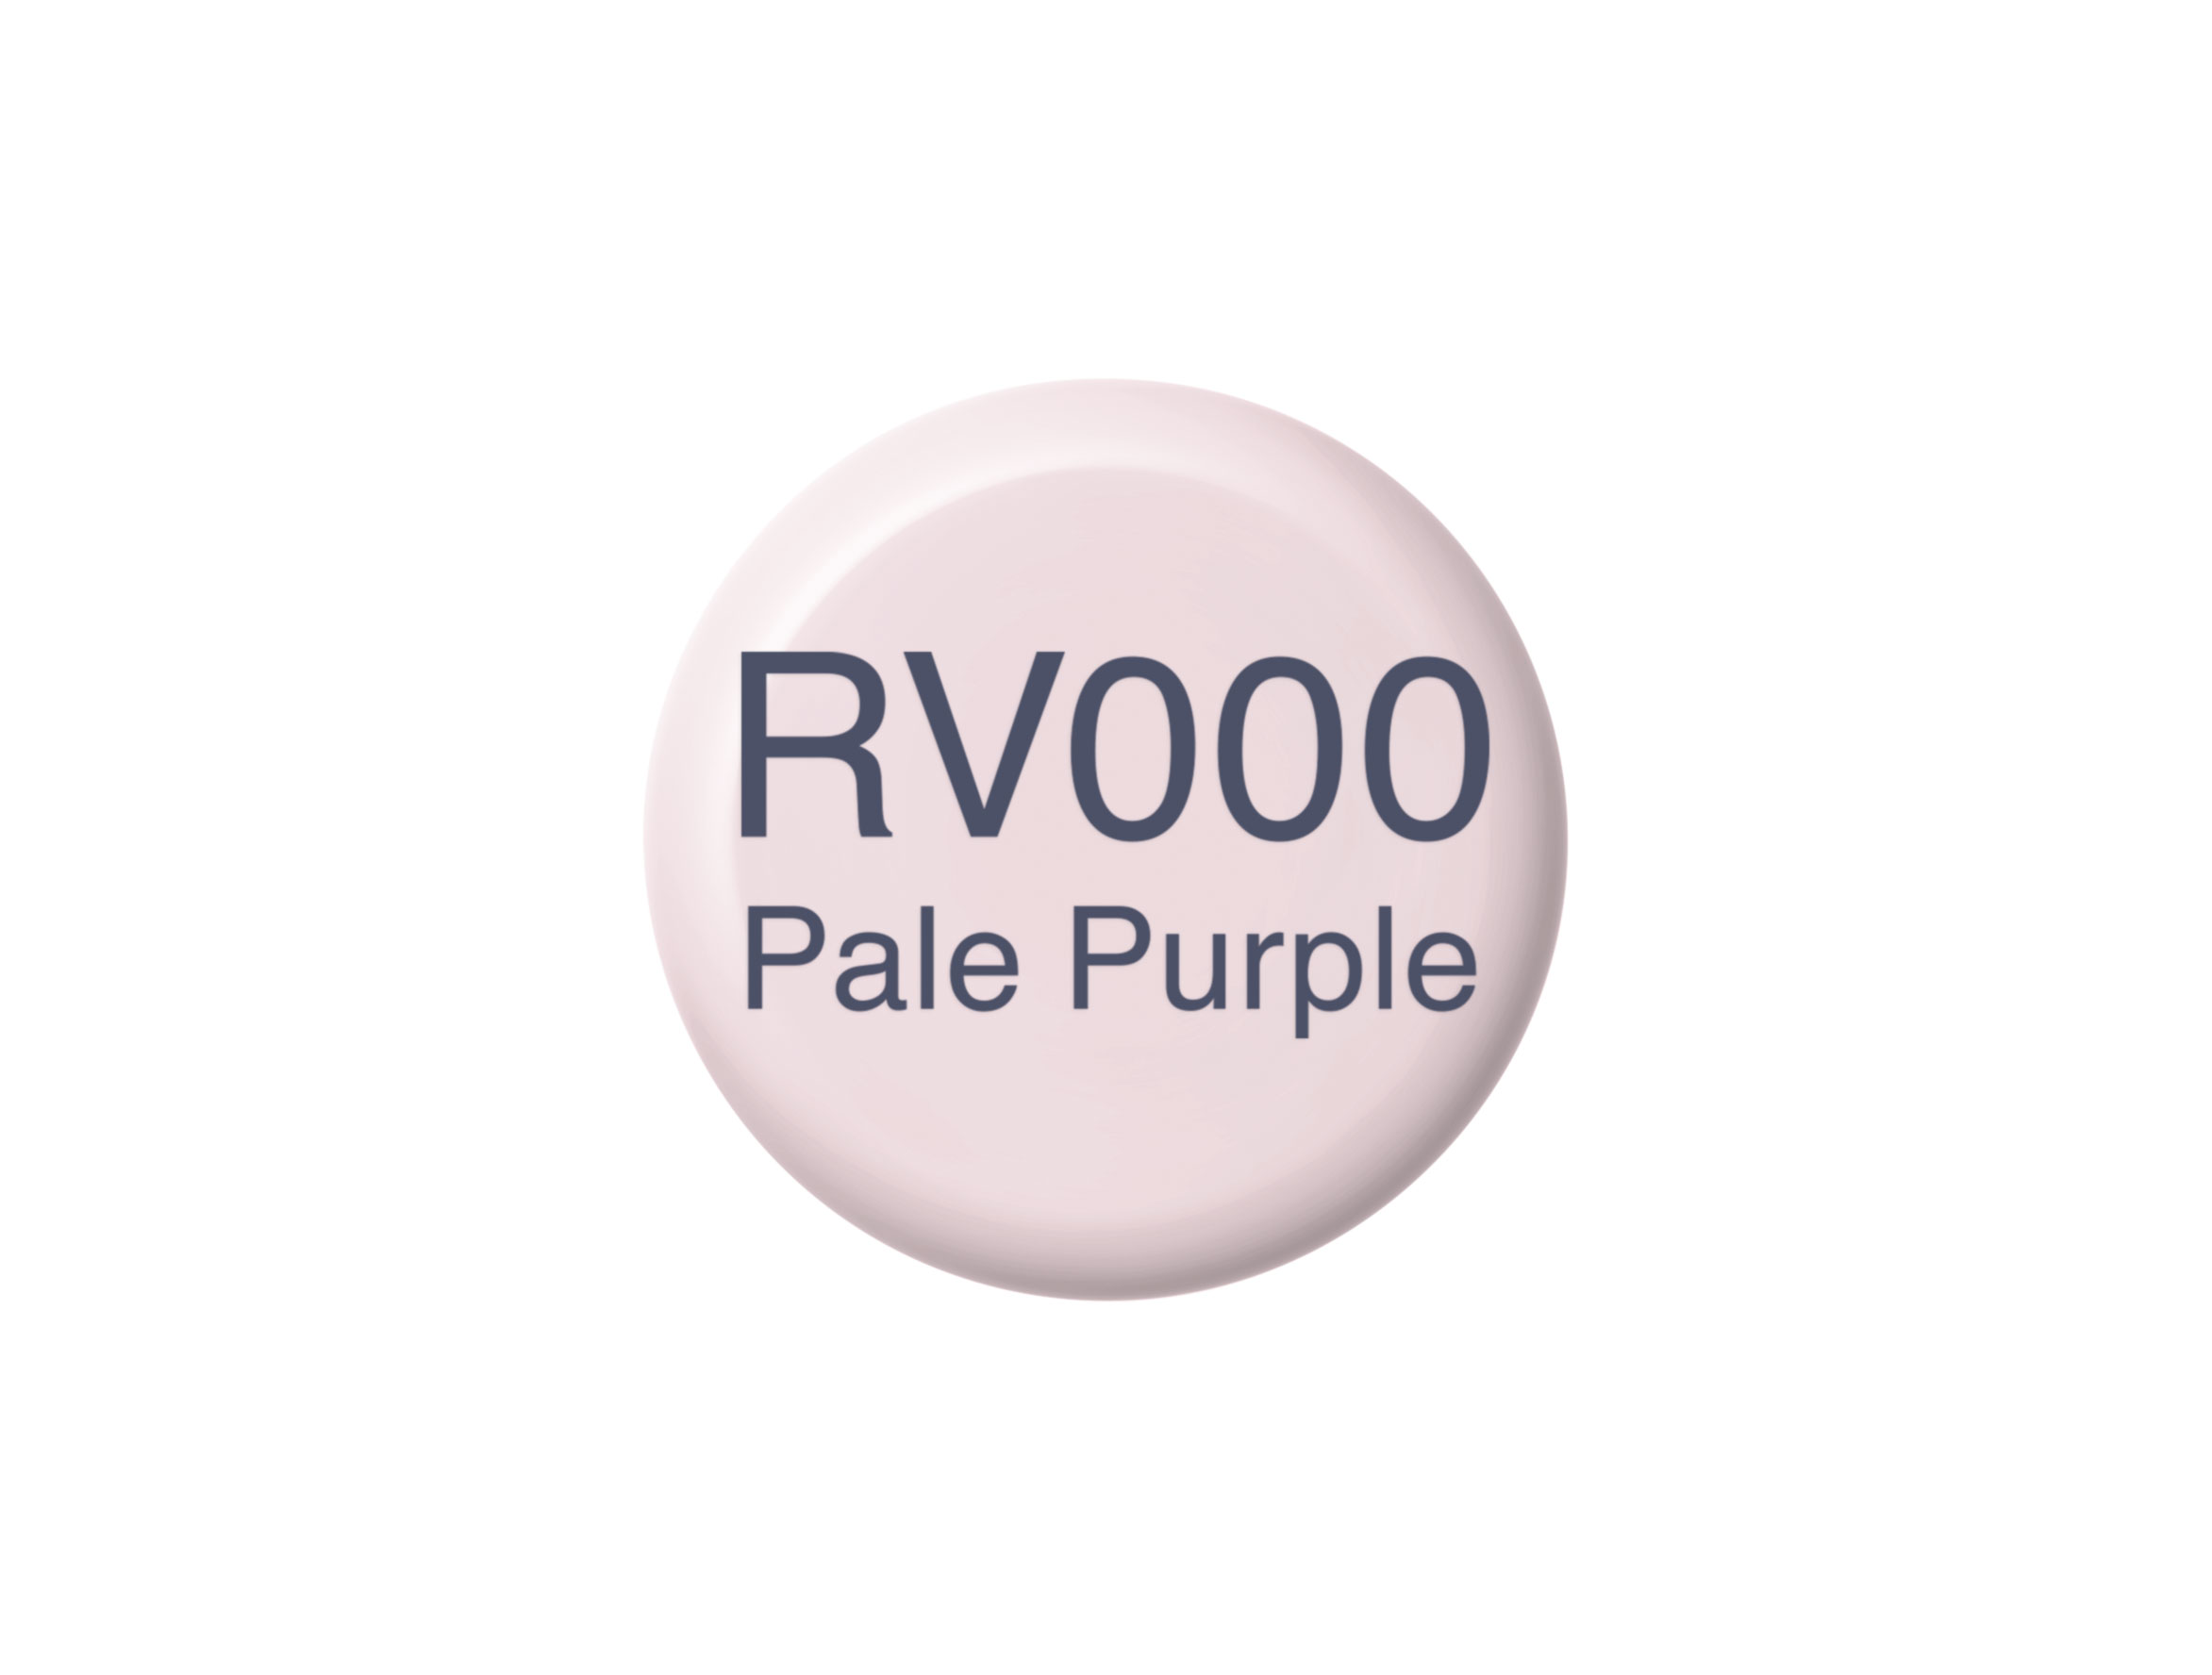 Copic Ink RV000 Pale Purple